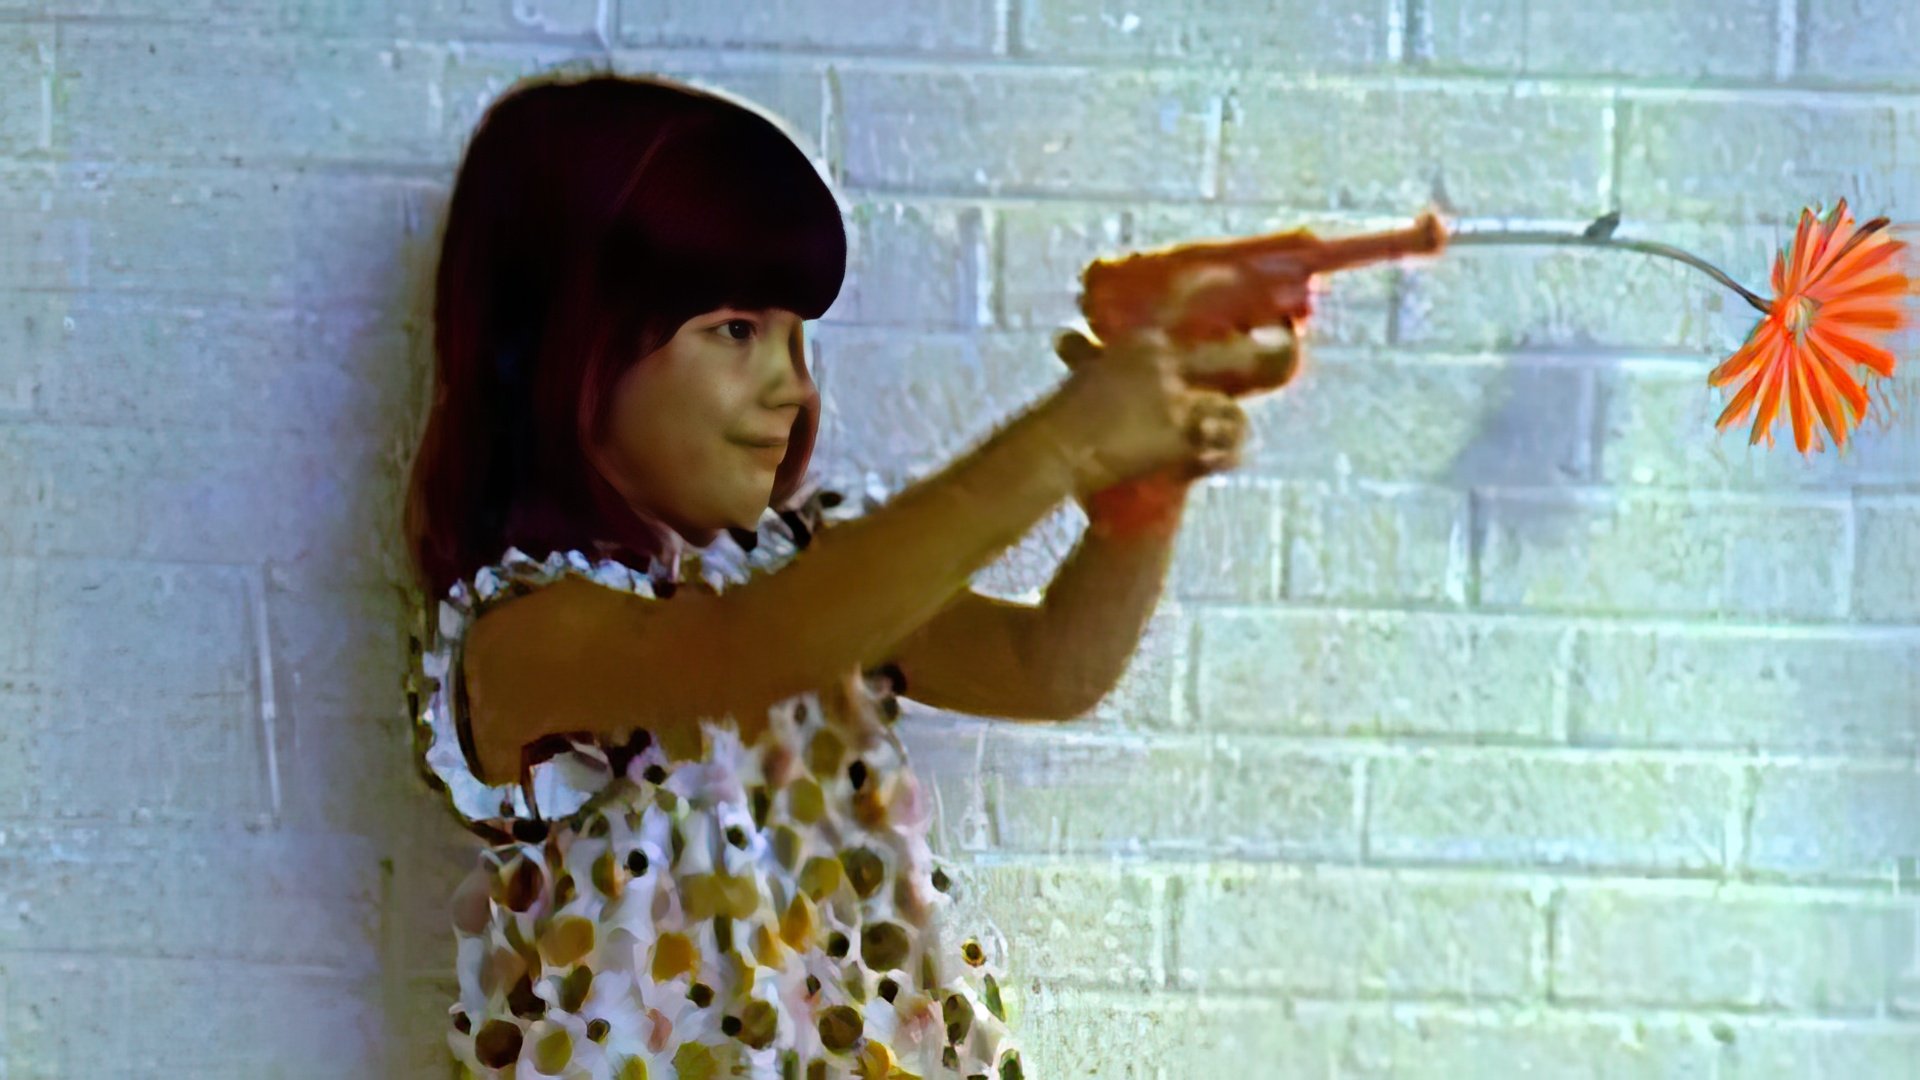  Sandra Bullock in her childhood